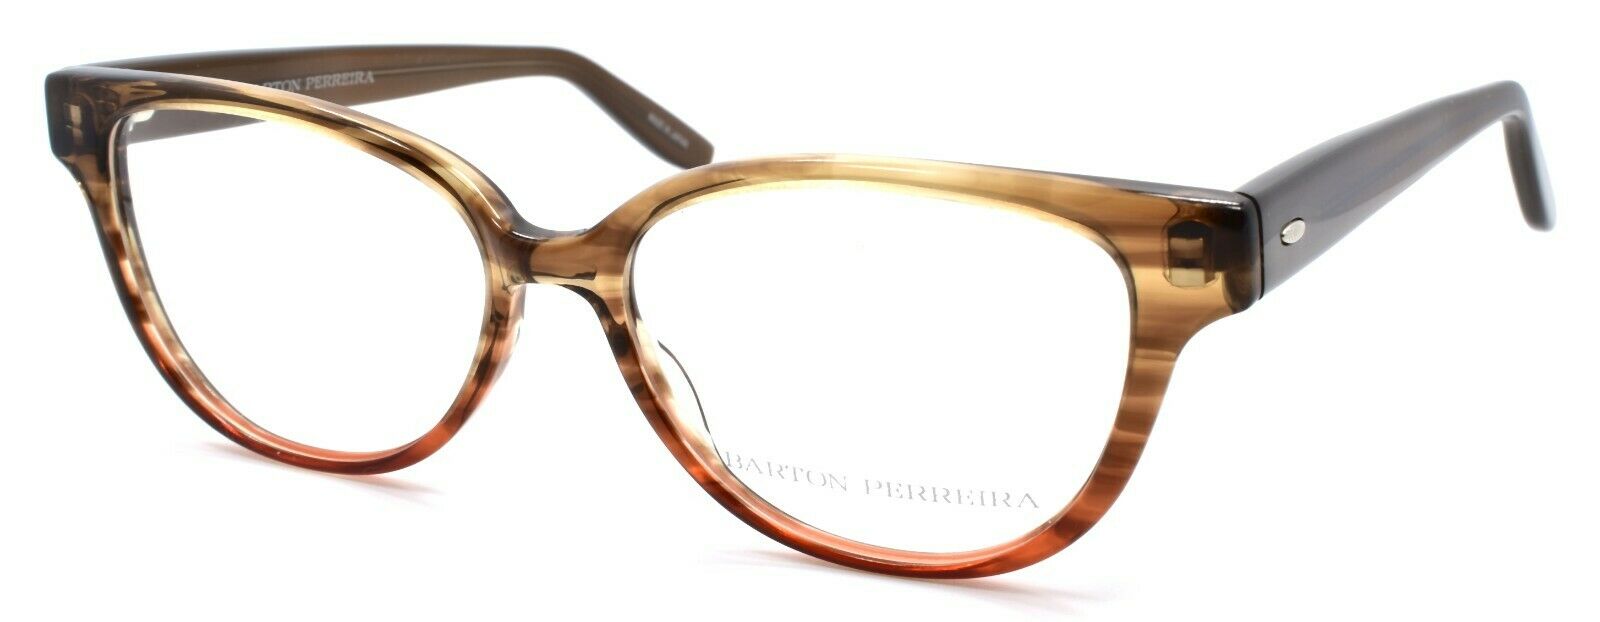 1-Barton Perreira Veronica GYR Women's Eyeglasses Frames 50-15-143 Gypsy Rose-672263039969-IKSpecs